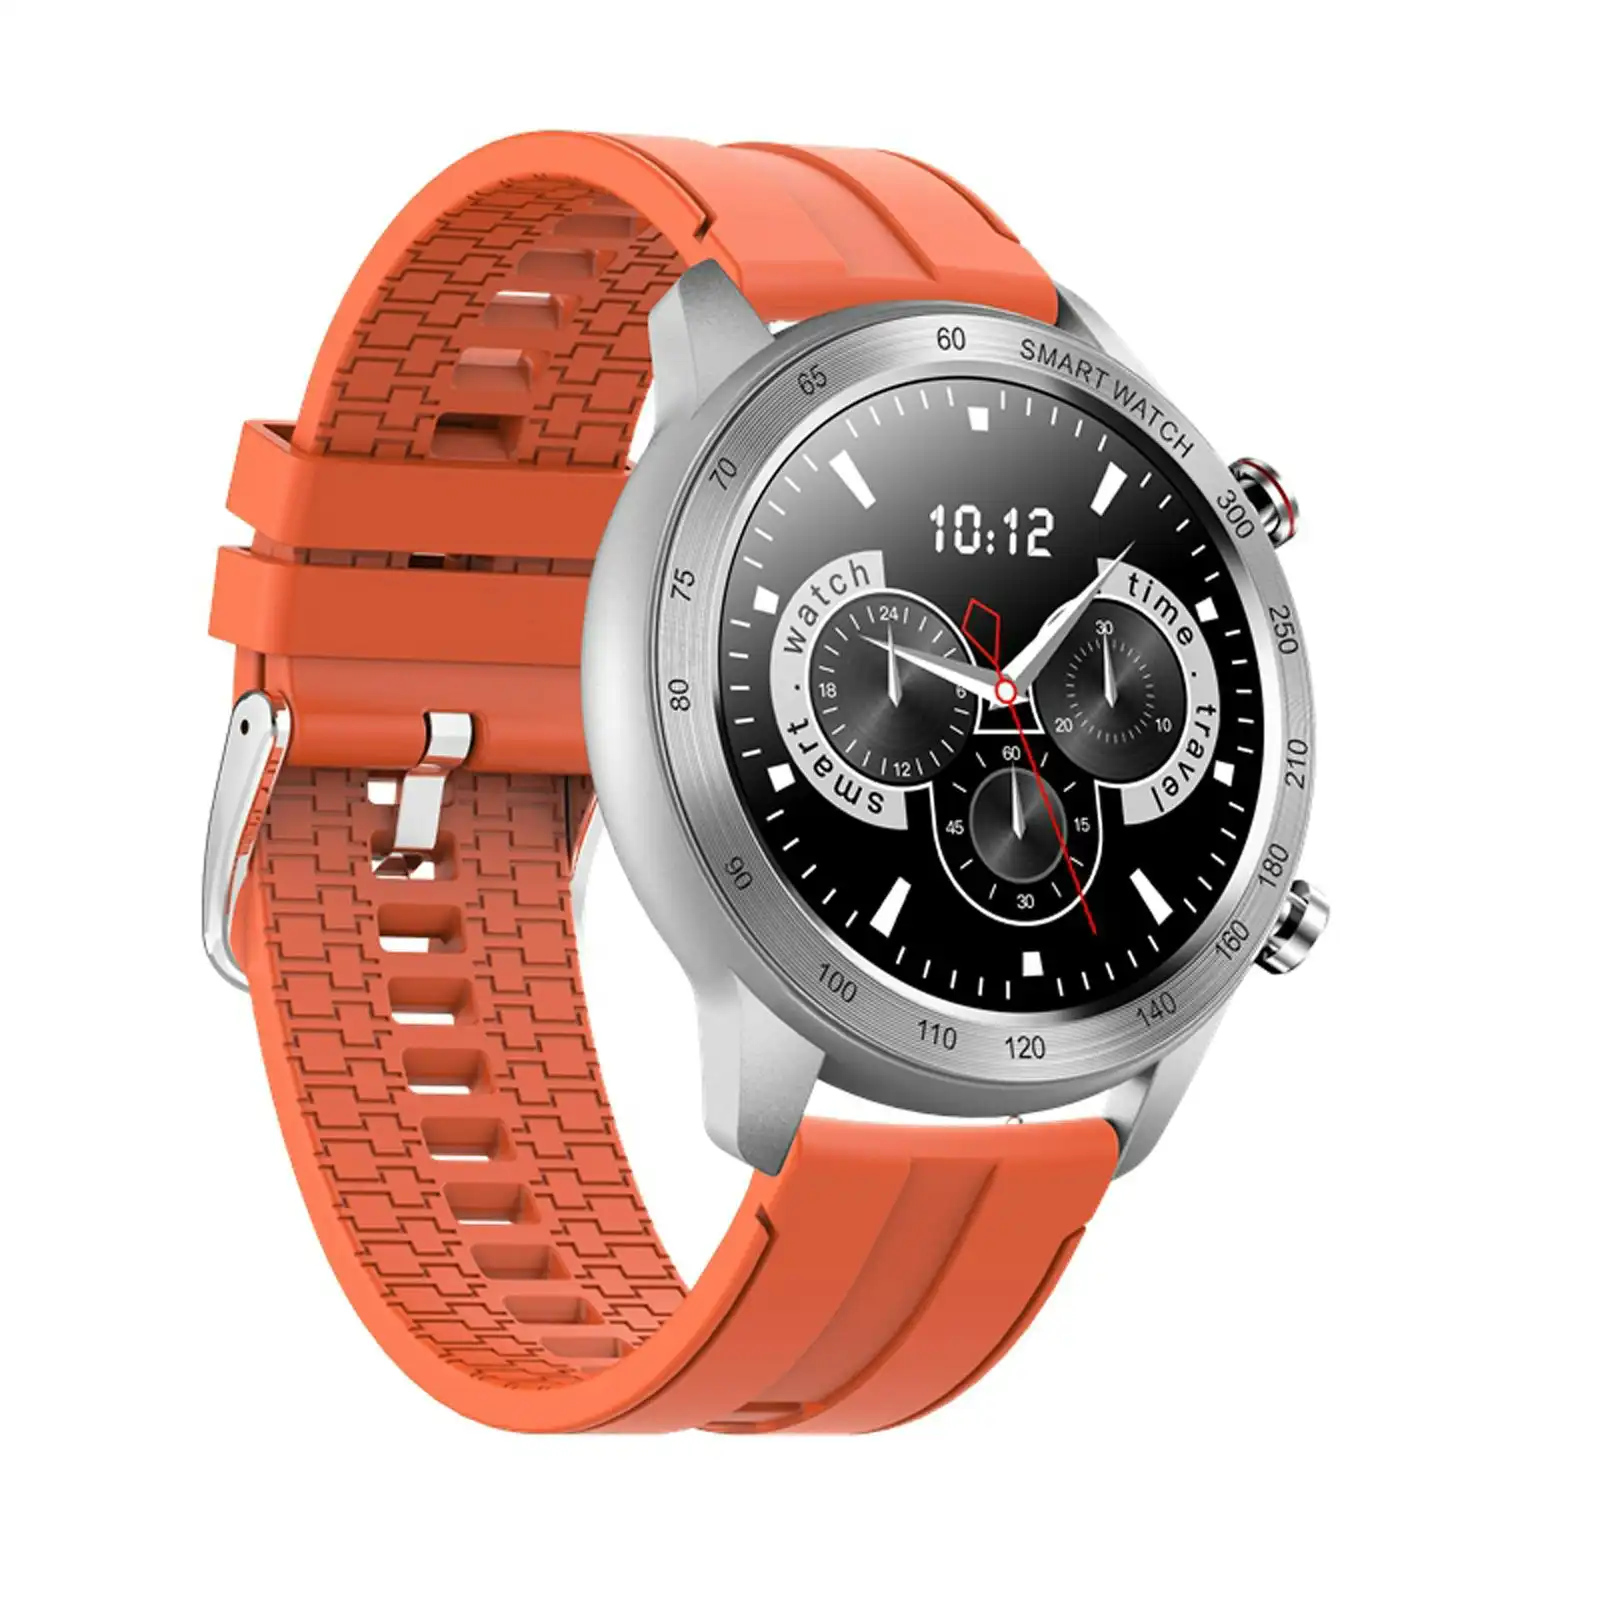 TODO Bluetooth Smart Watch Sports Monitor Heart Rate Blood Pressure - Orange